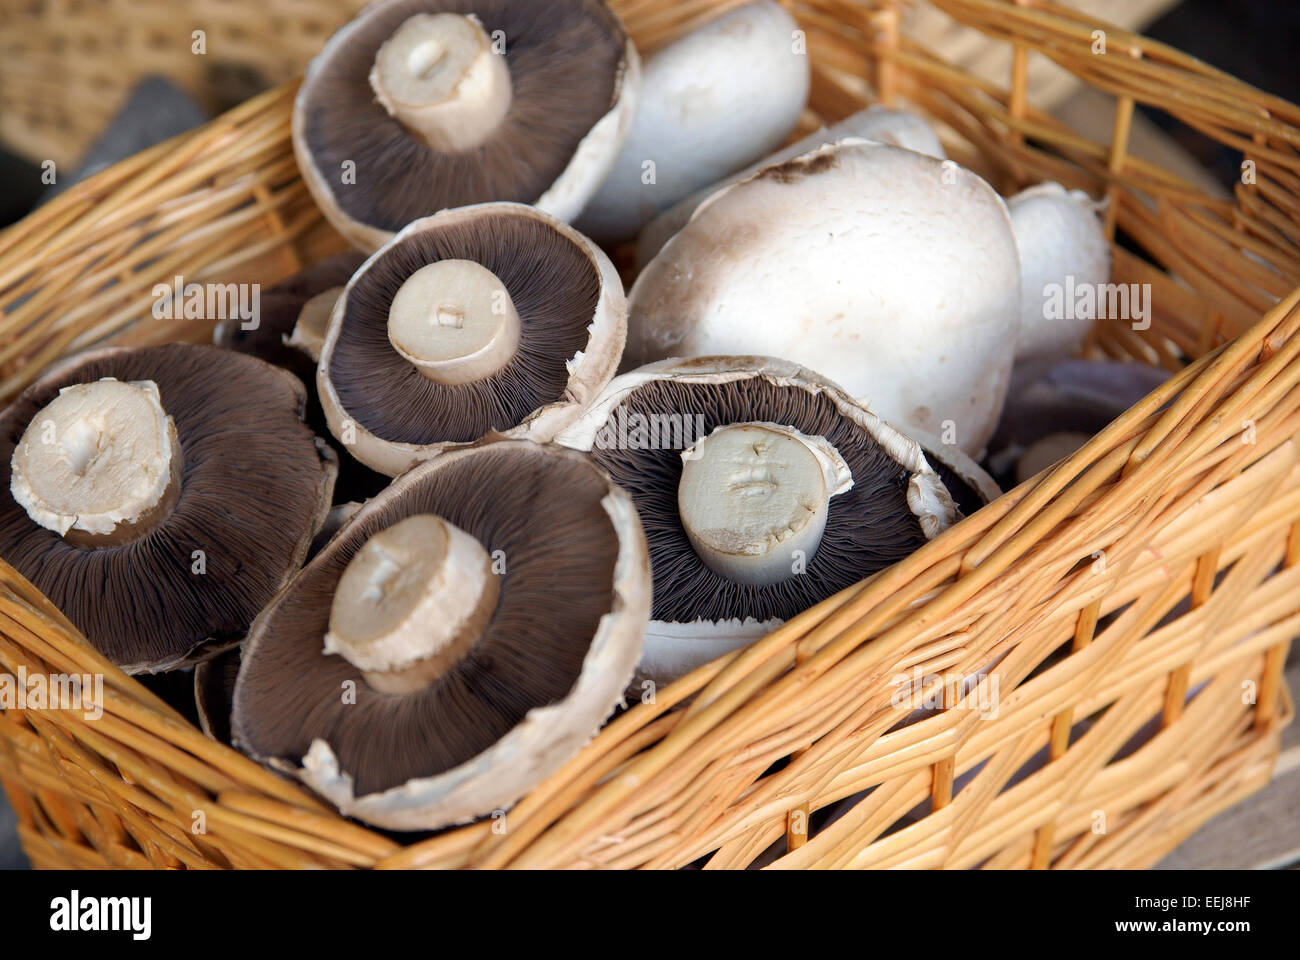 Fresh edible mushrooms in baskets at a farm shop or farmers market Stock Photo